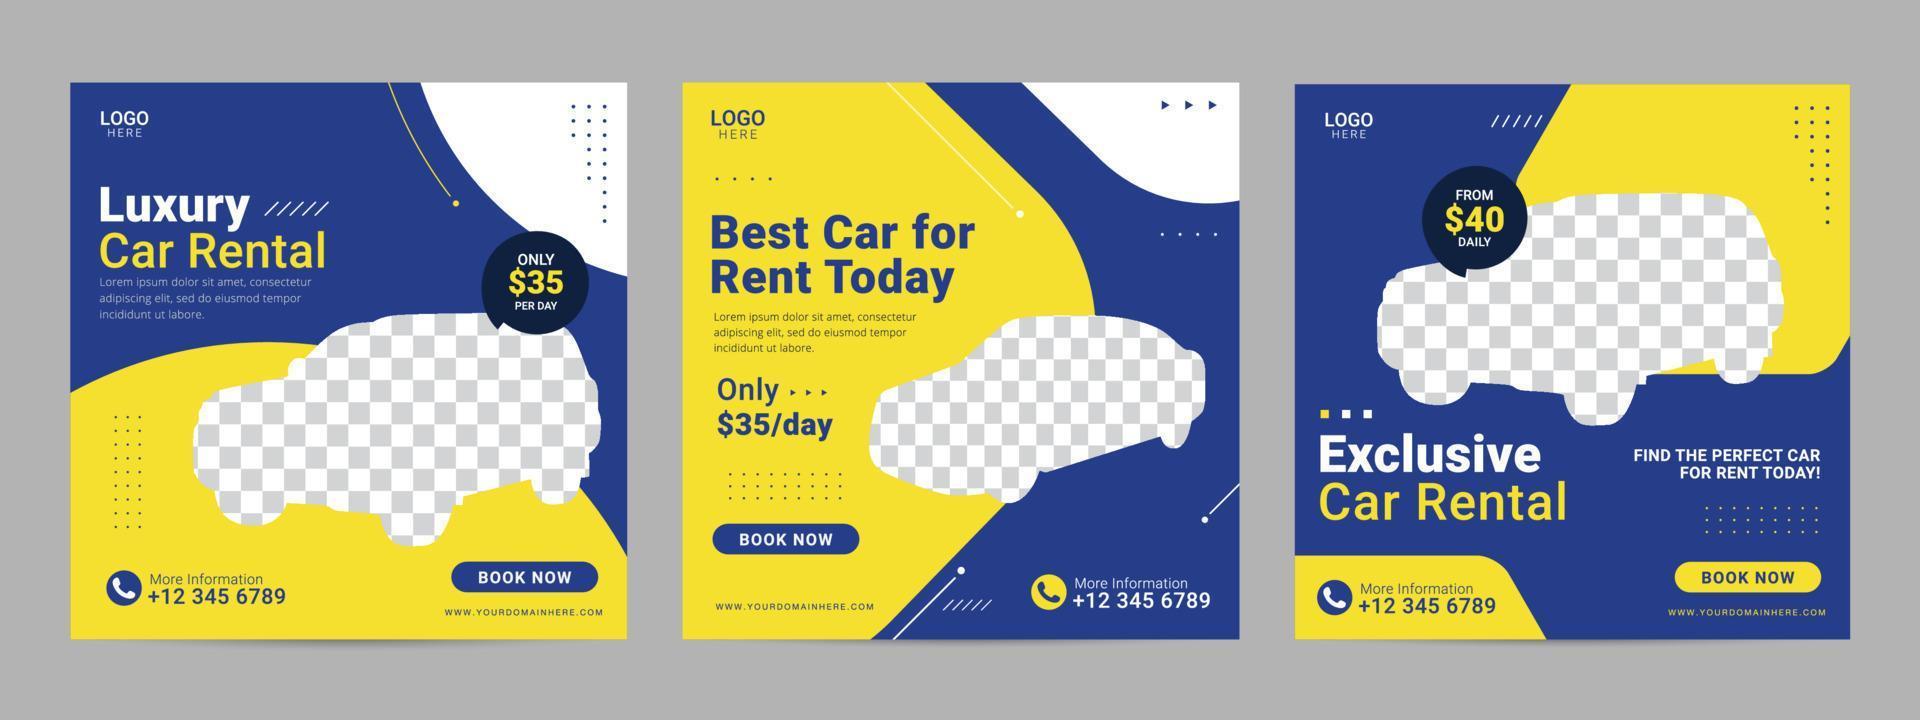 Car rental social media post template banner for promotion vector